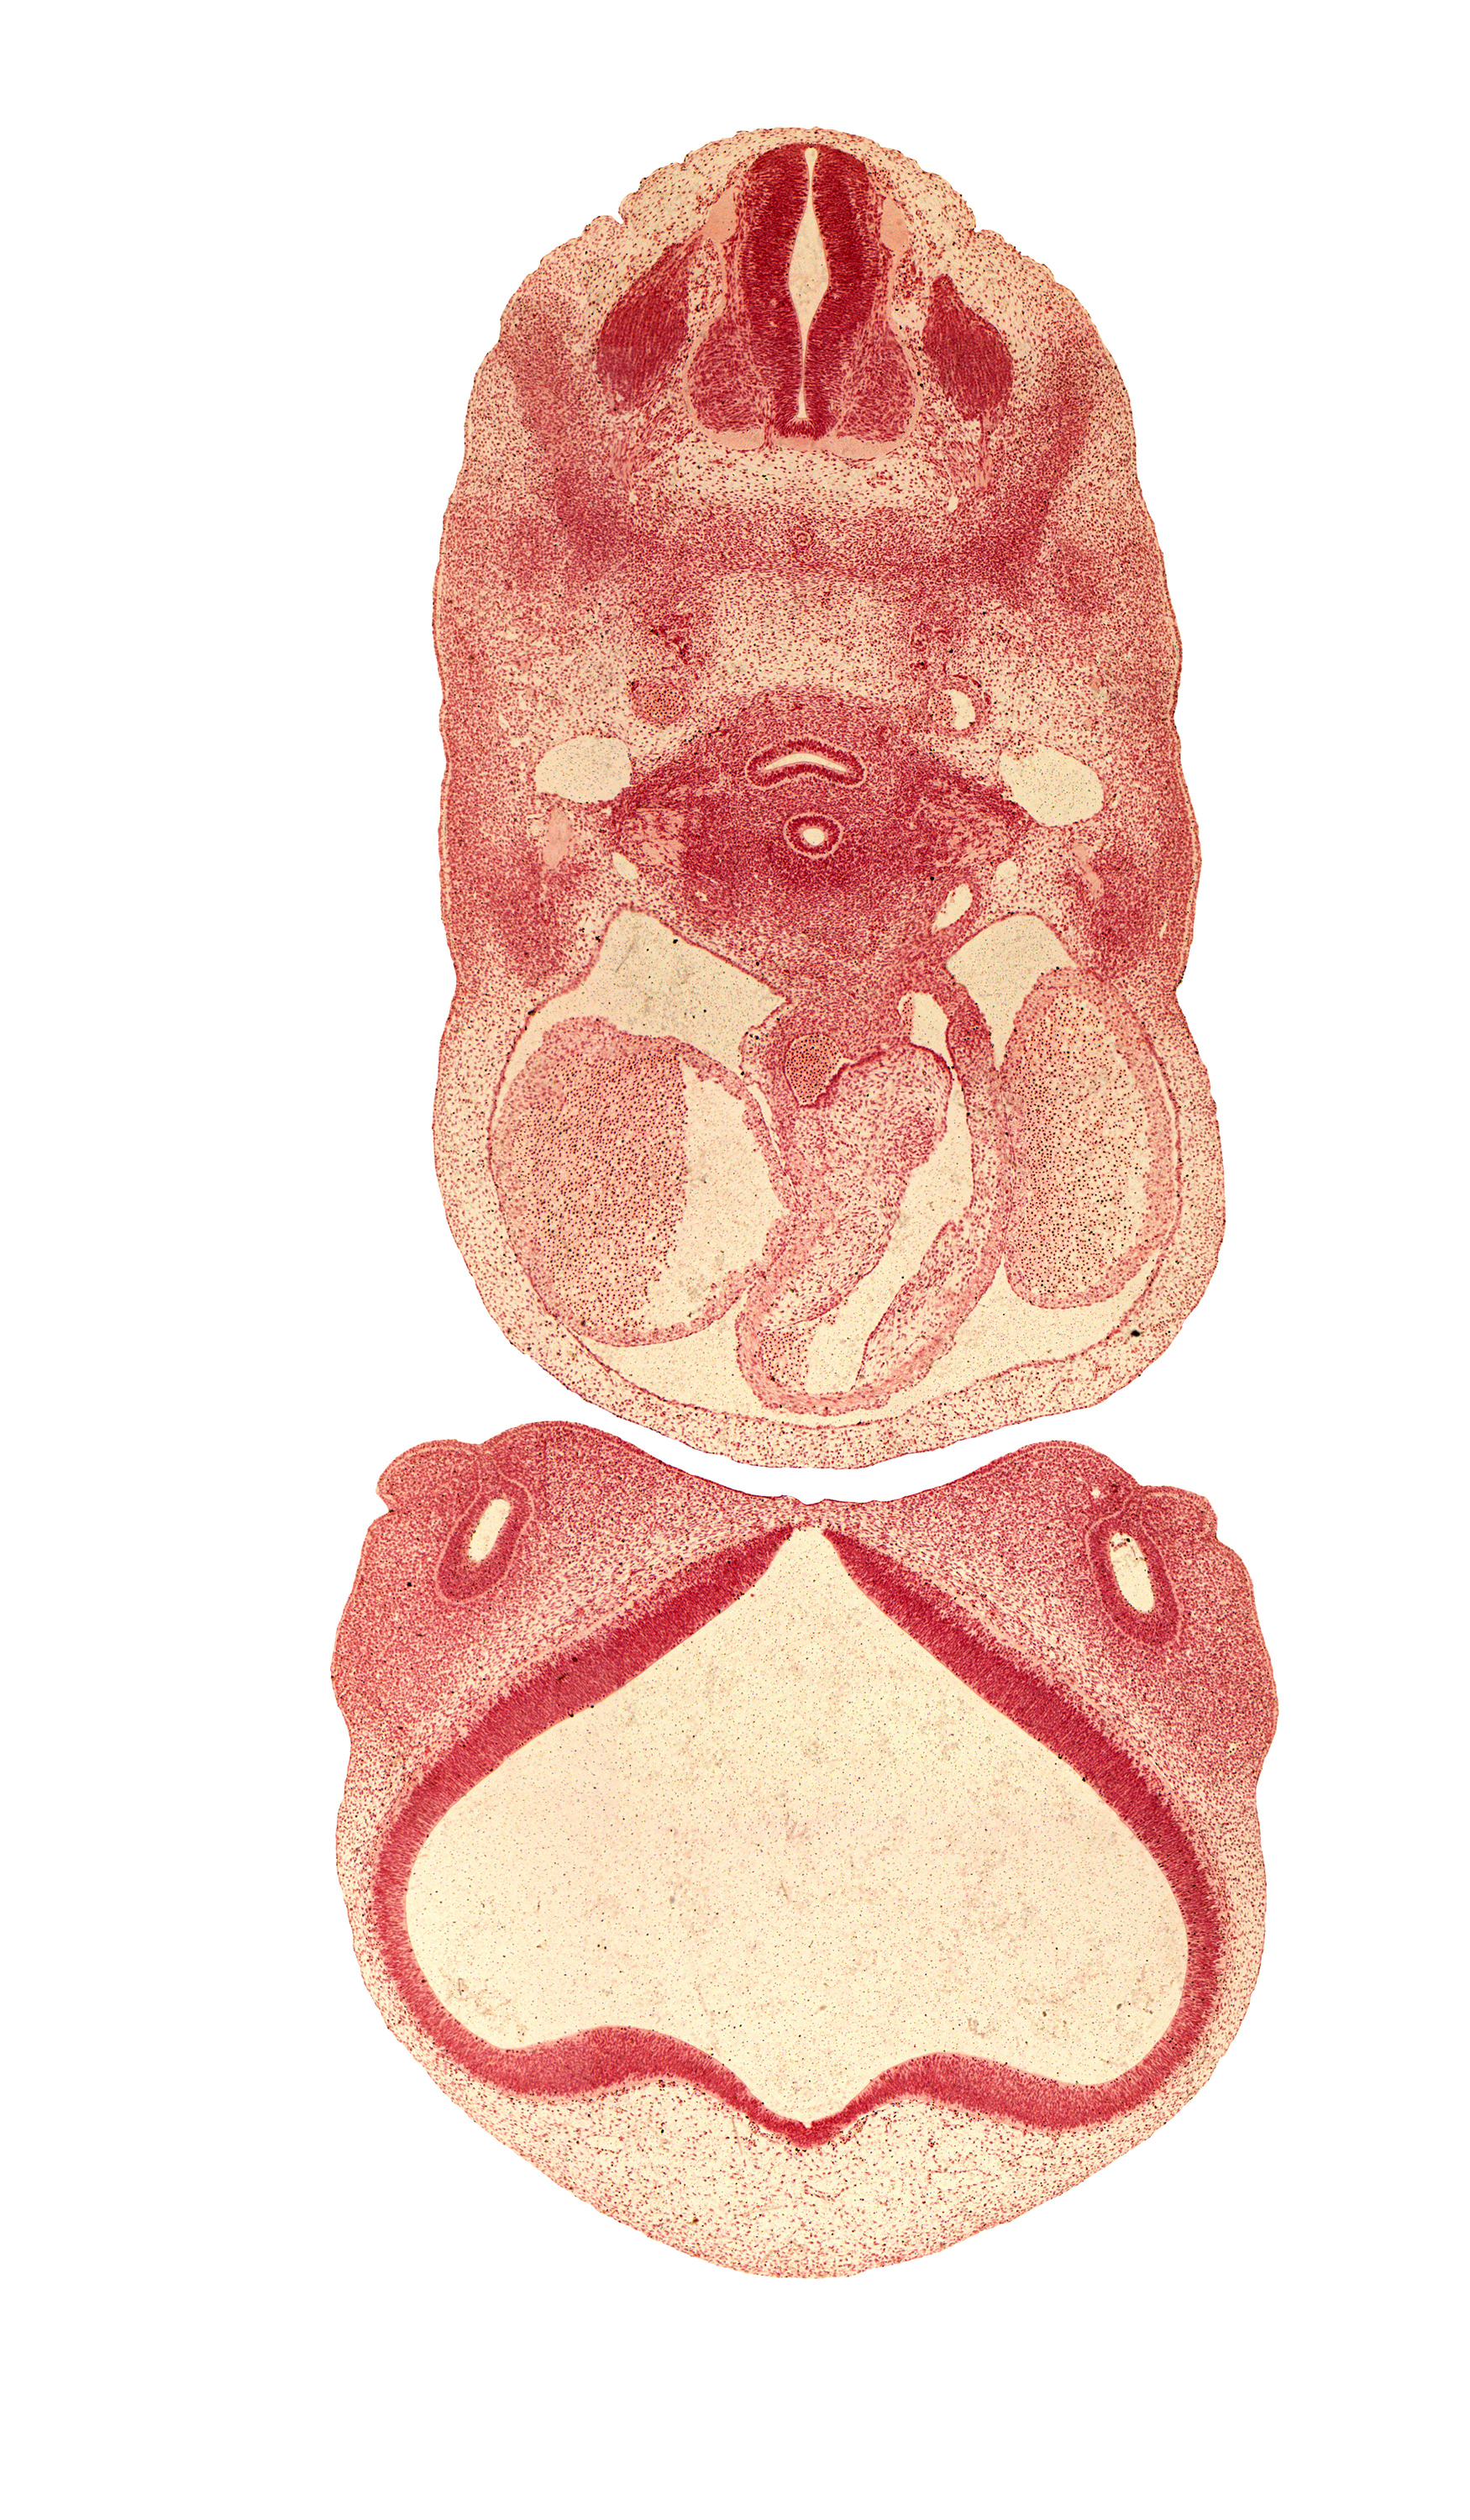 C-4 spinal ganglion, aorticopulmonary septum, blood cells, central canal, cerebral vesicle (telencephalon), conus cordis (proximal outflow tract), dorsal aorta, ectoderm, lateral ventricle, left atrium, lumen of nasal sac, medial nasal prominence(s), nasal capsule, pericardial cavity, precardinal vein, primordial meninx, right atrium, semilunar valve region, sympathetic trunk, third ventricle, undivided truncus arteriosus (distal outflow tract), vagus nerve (CN X), vascular plexus